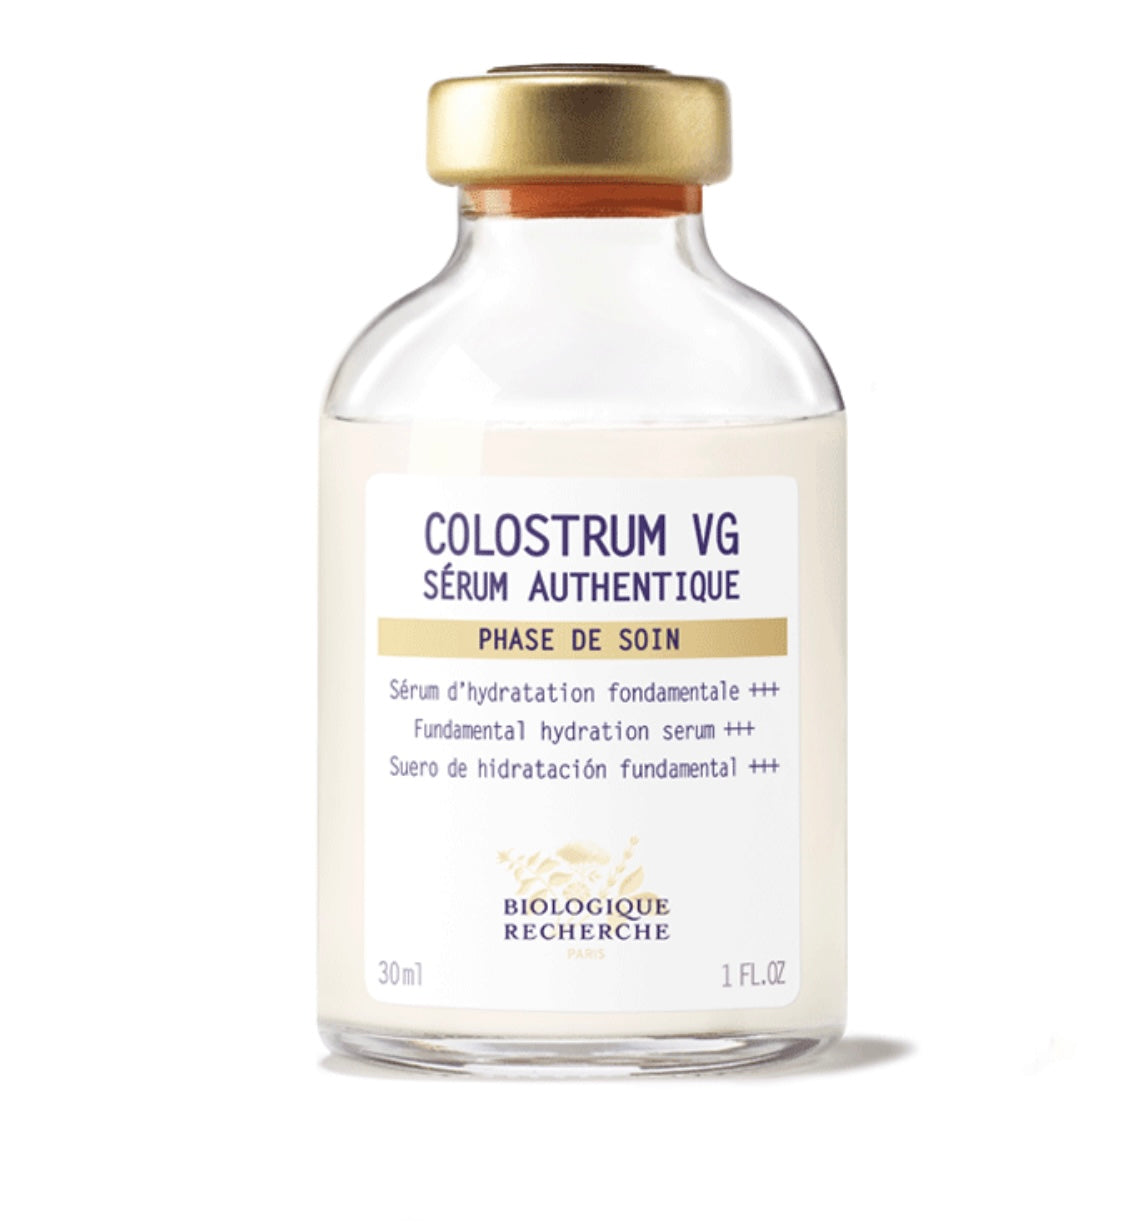 Biologique Recherche - Colostrum VG - authentic serum